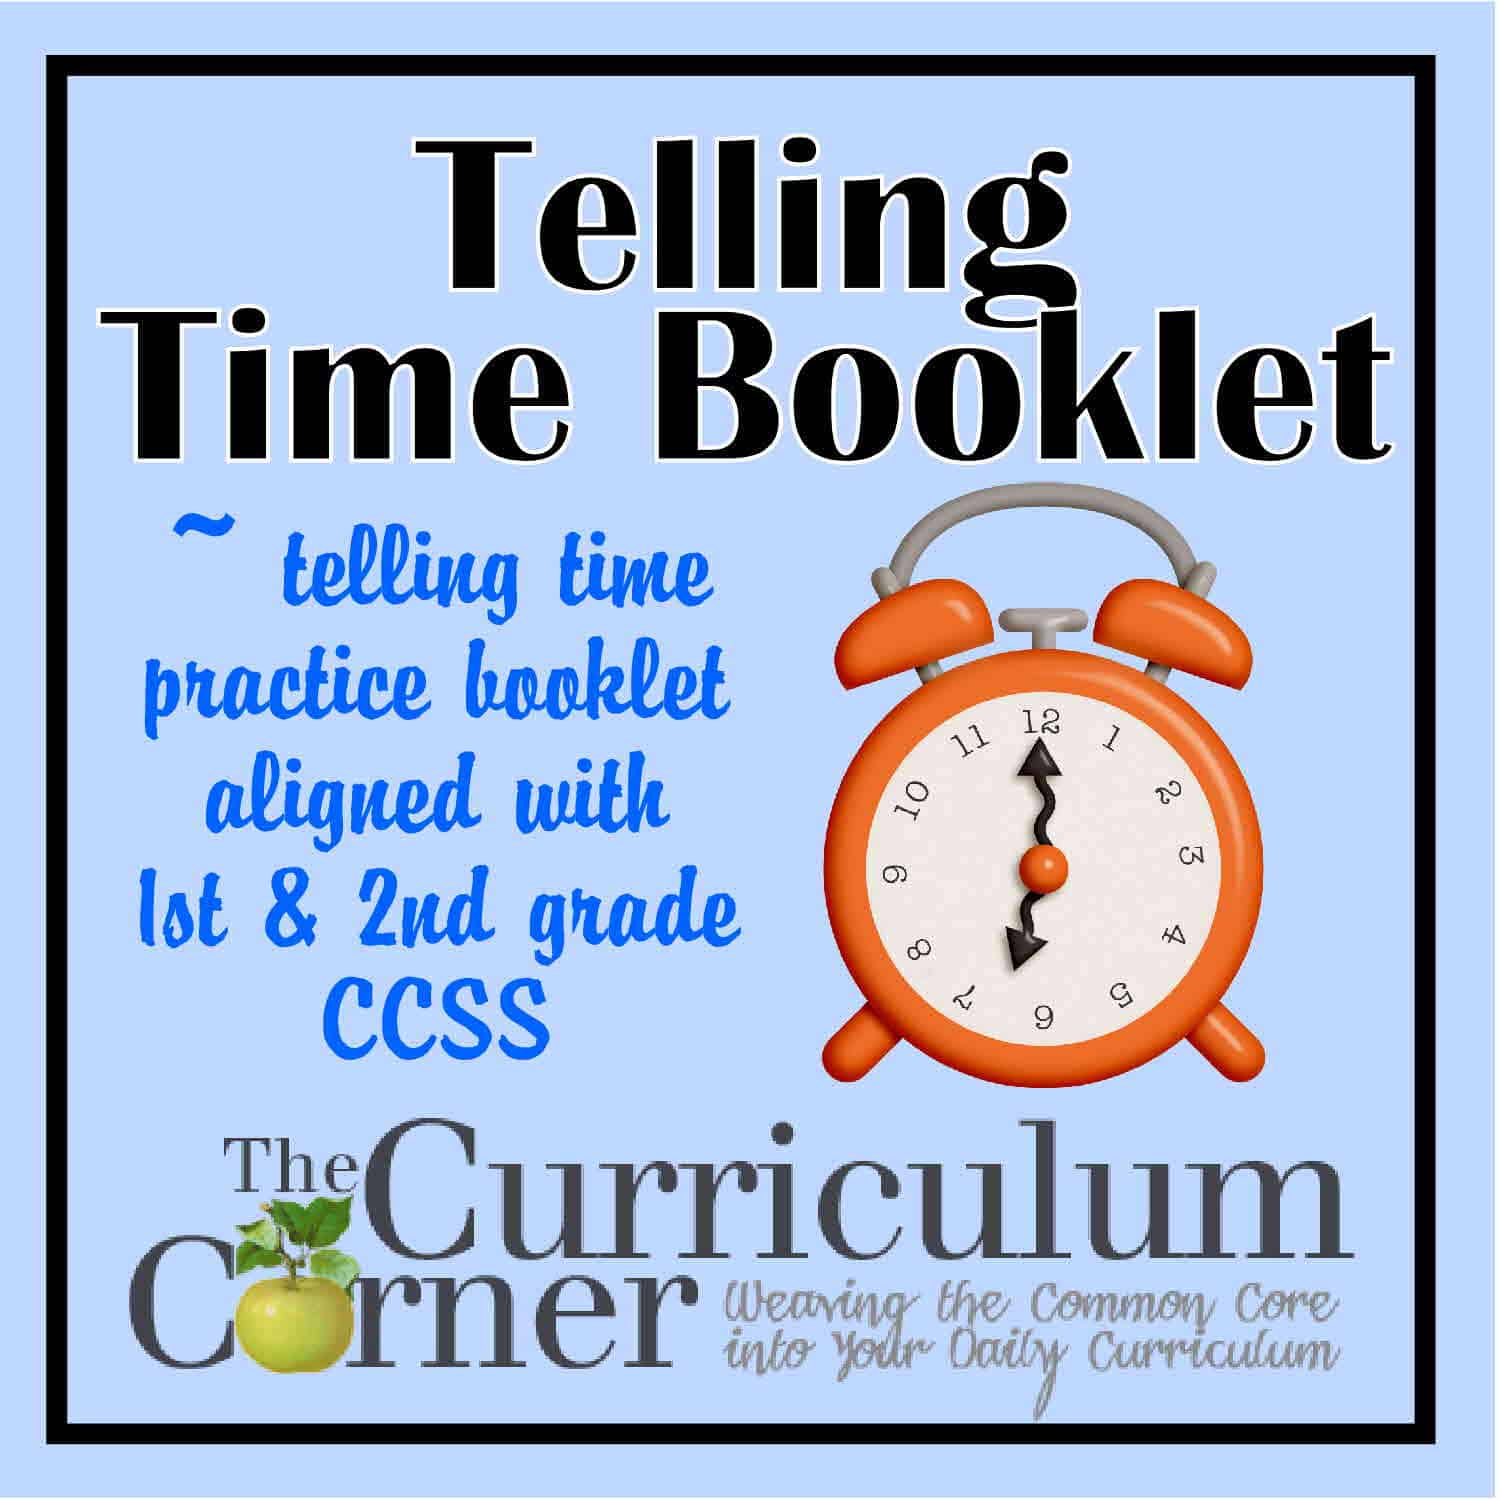 timebooklettitle-the-curriculum-corner-123